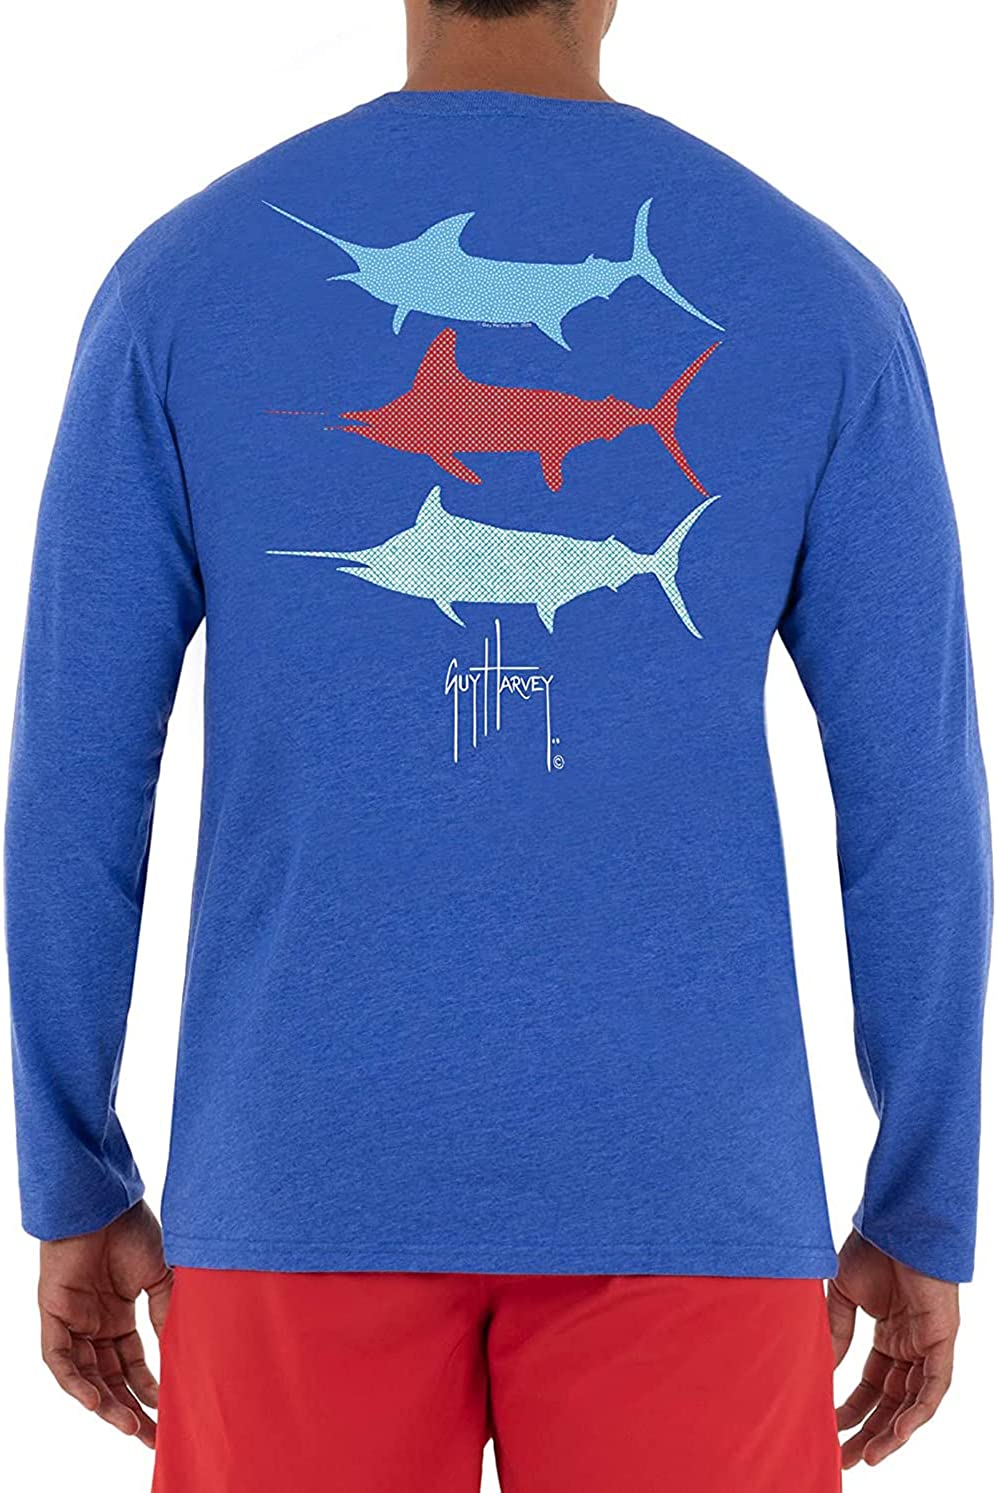 Guy Harvey Mens Offshore Fish Collection Long Sleeve T-Shirt - Estate Blue 3X Large, Men's, Size: 3XL